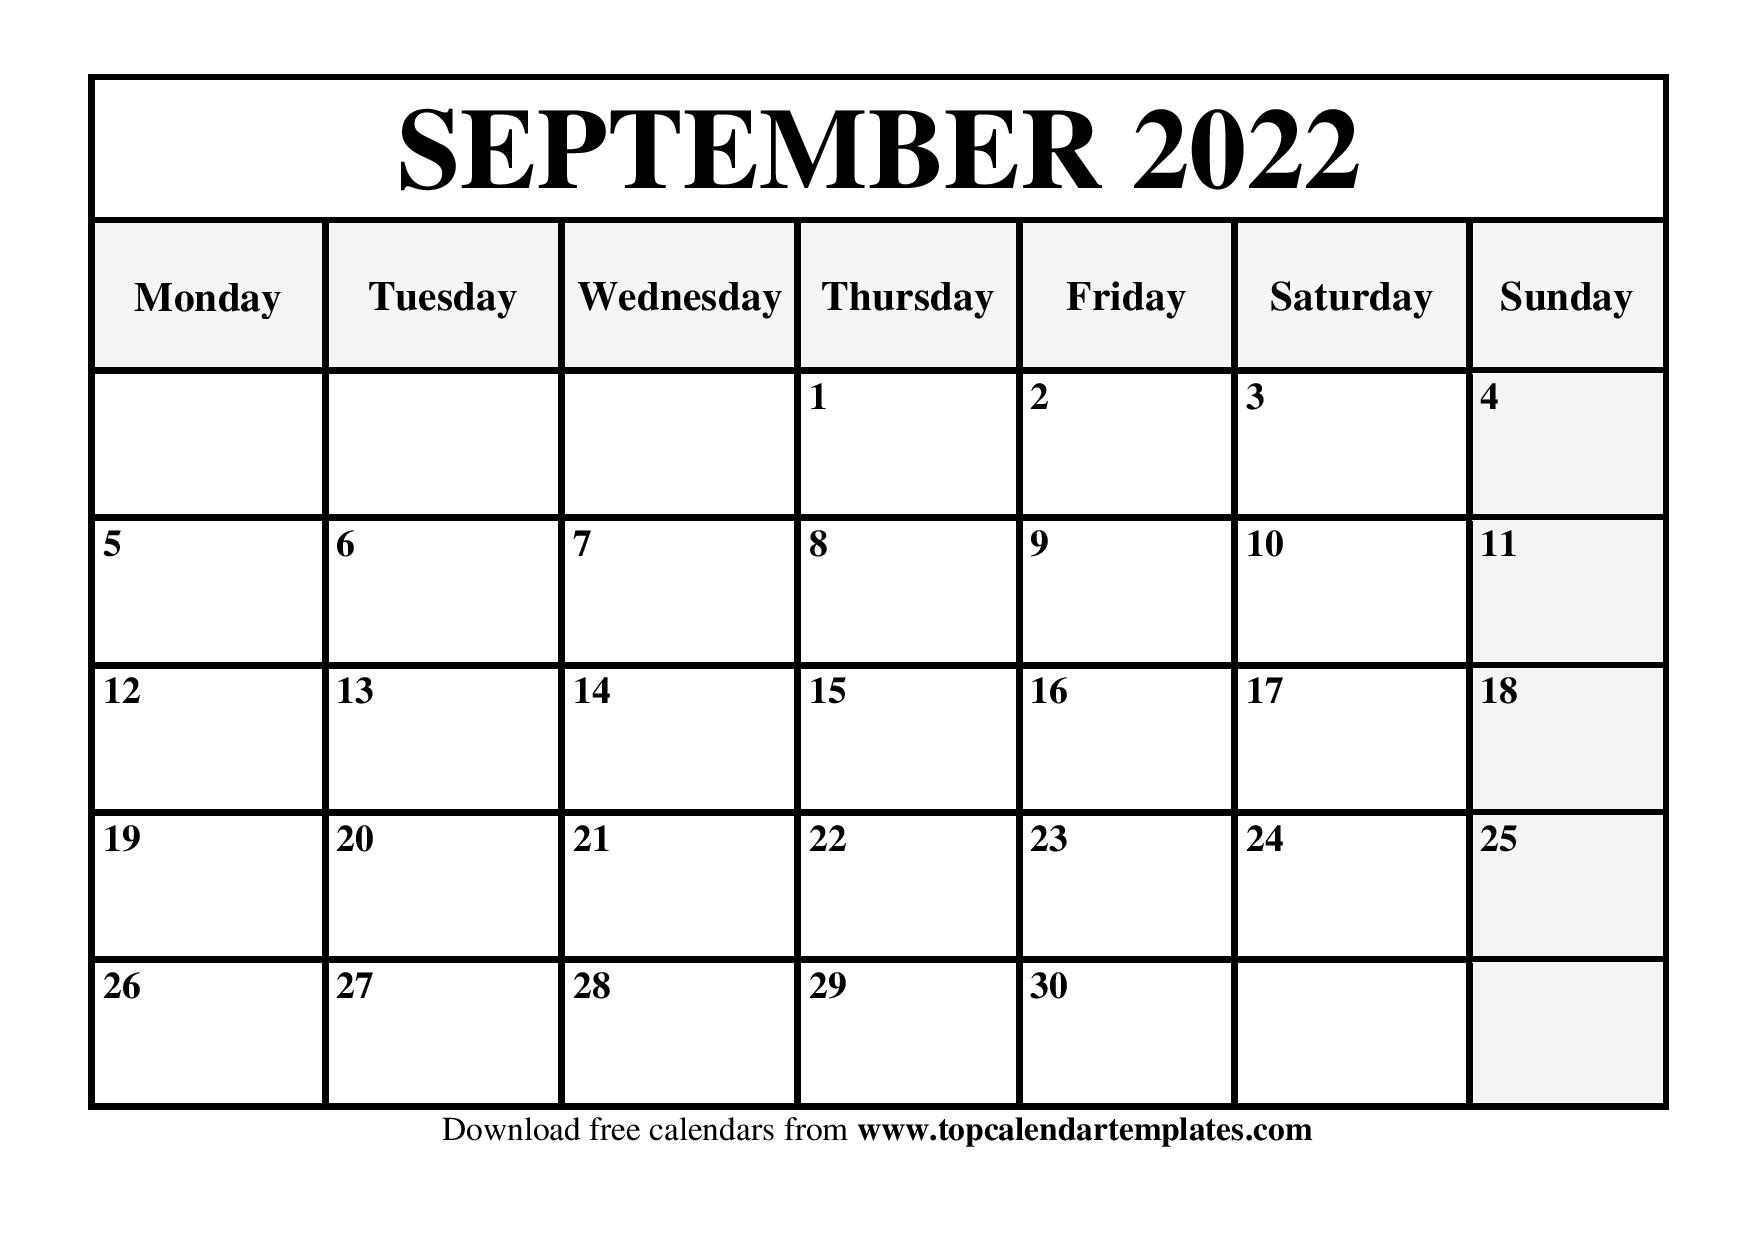 September 2022 Calendar Printable Calendar September 2022 Templates - Pdf, Word, Excel